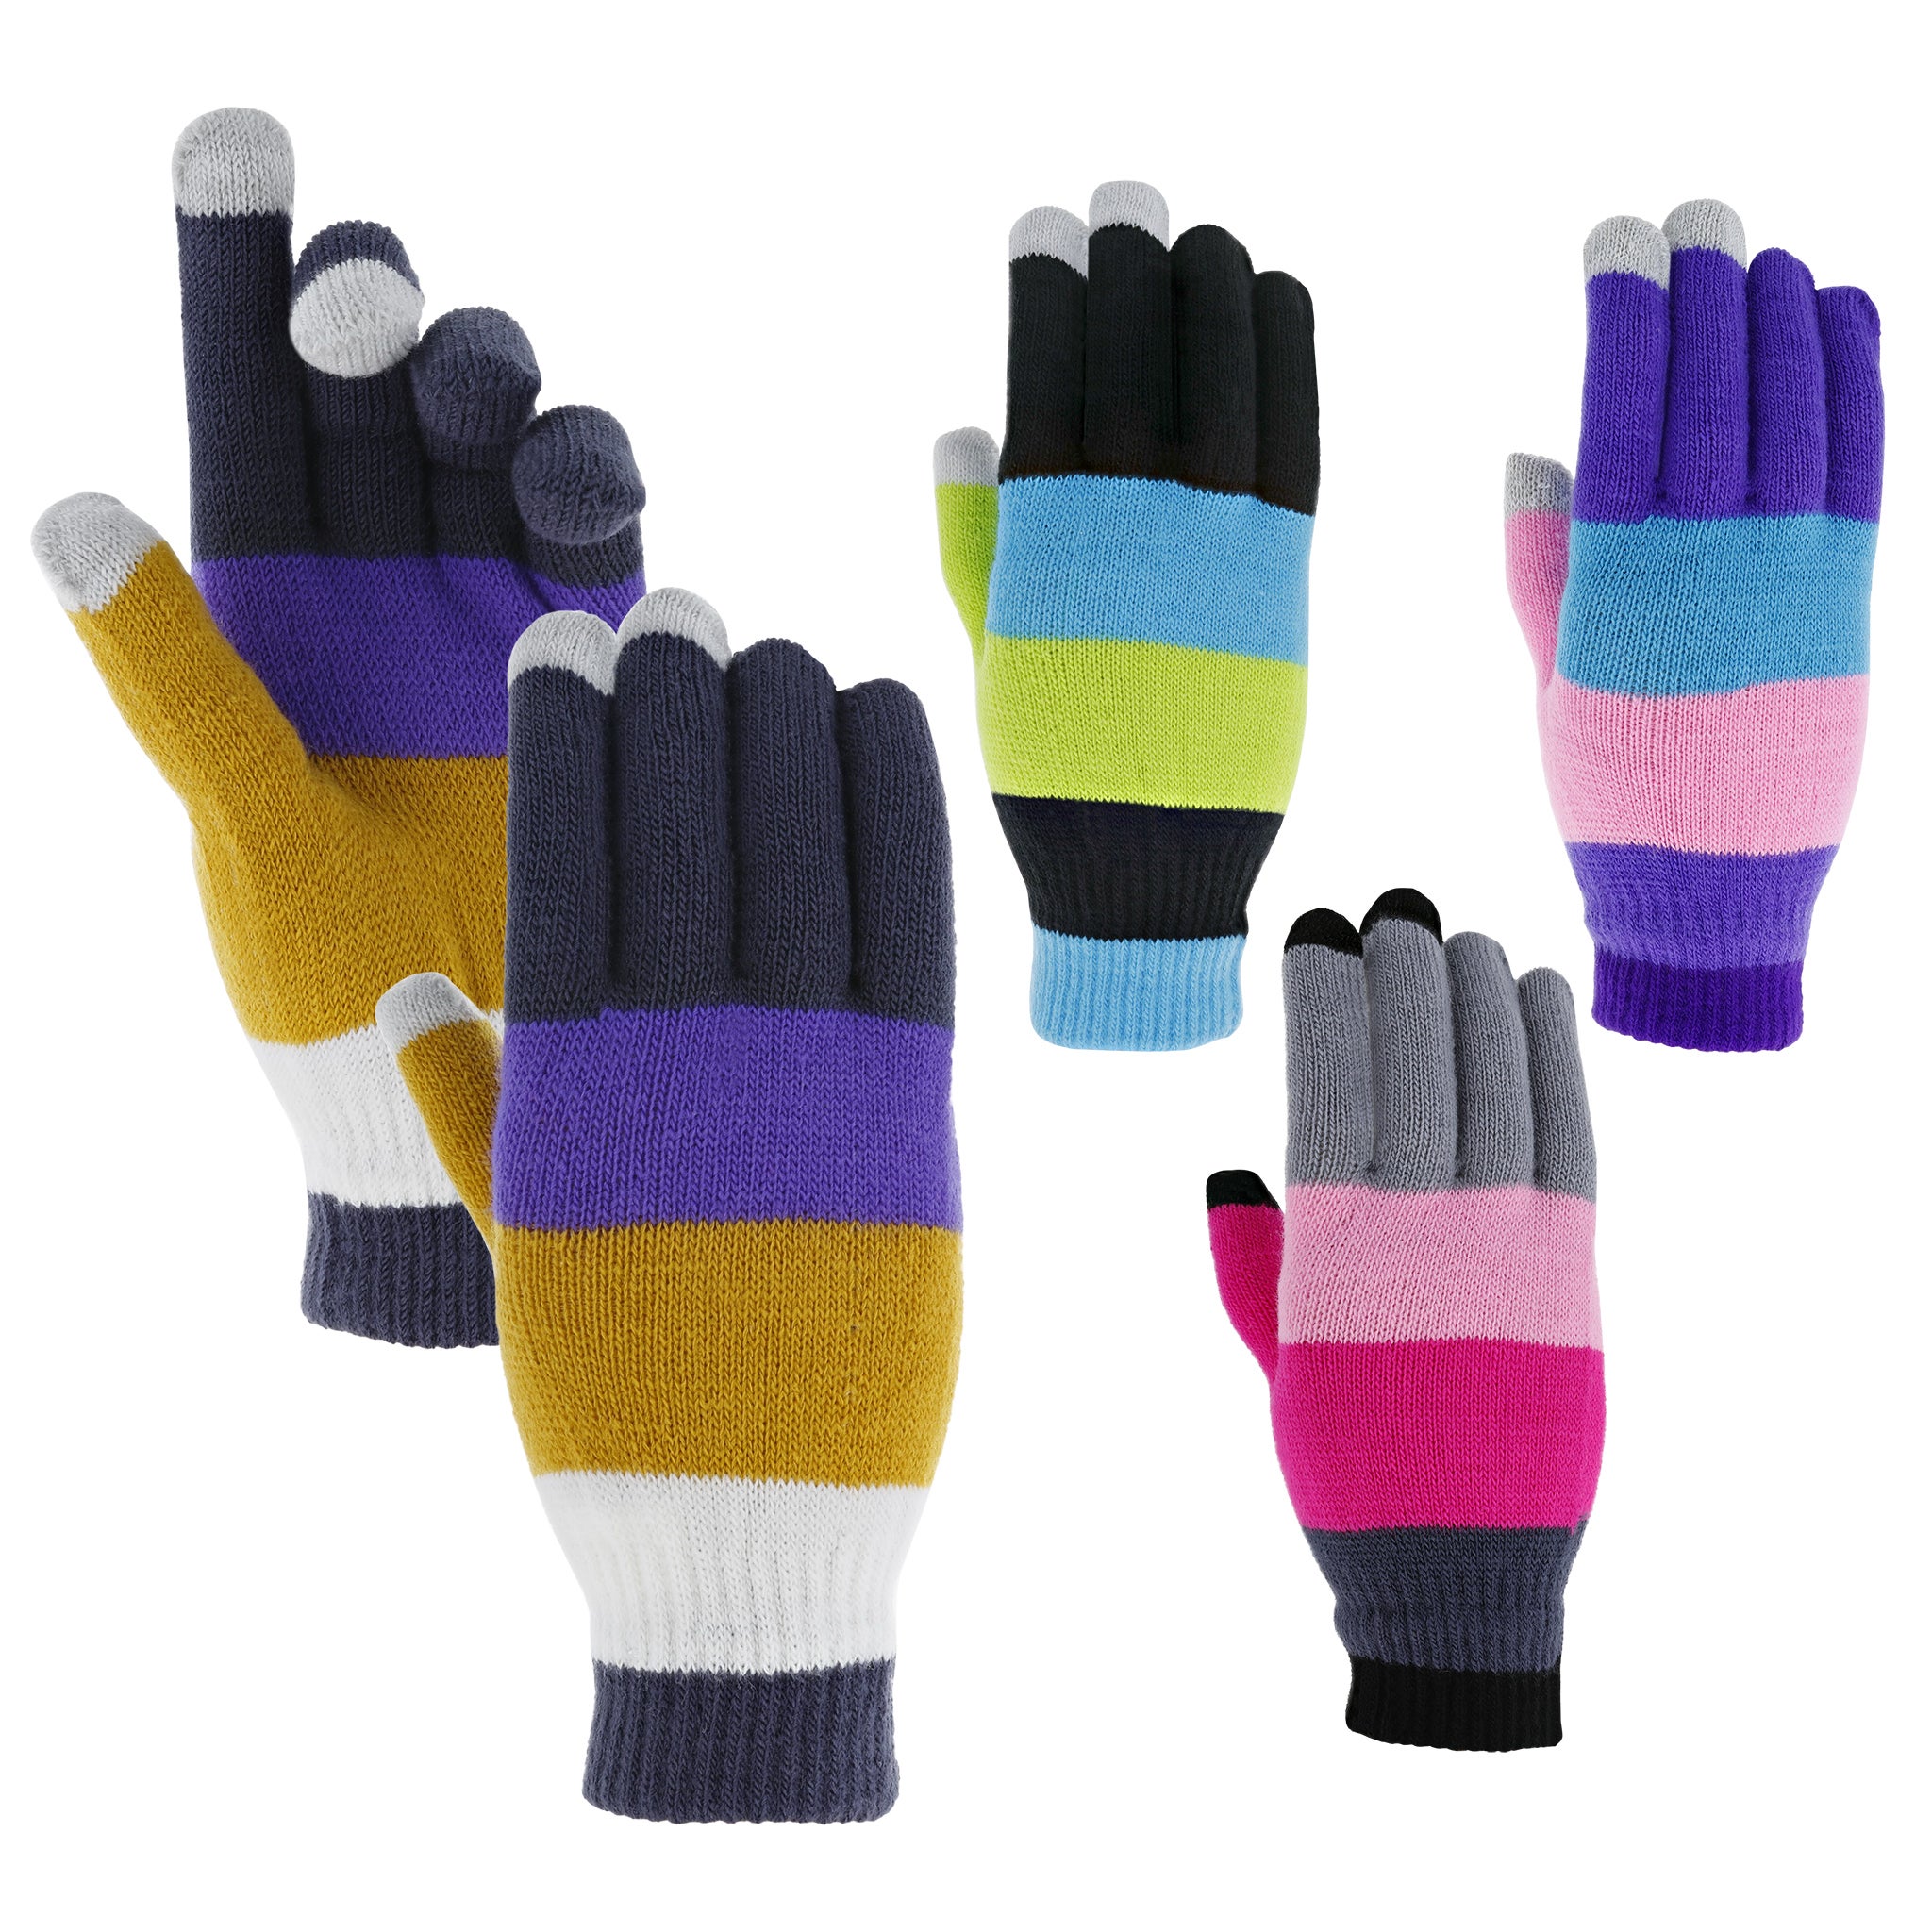 Gilbin Soft and Comfortable Fleece Linend Childrens Winter Magic Knit Gloves